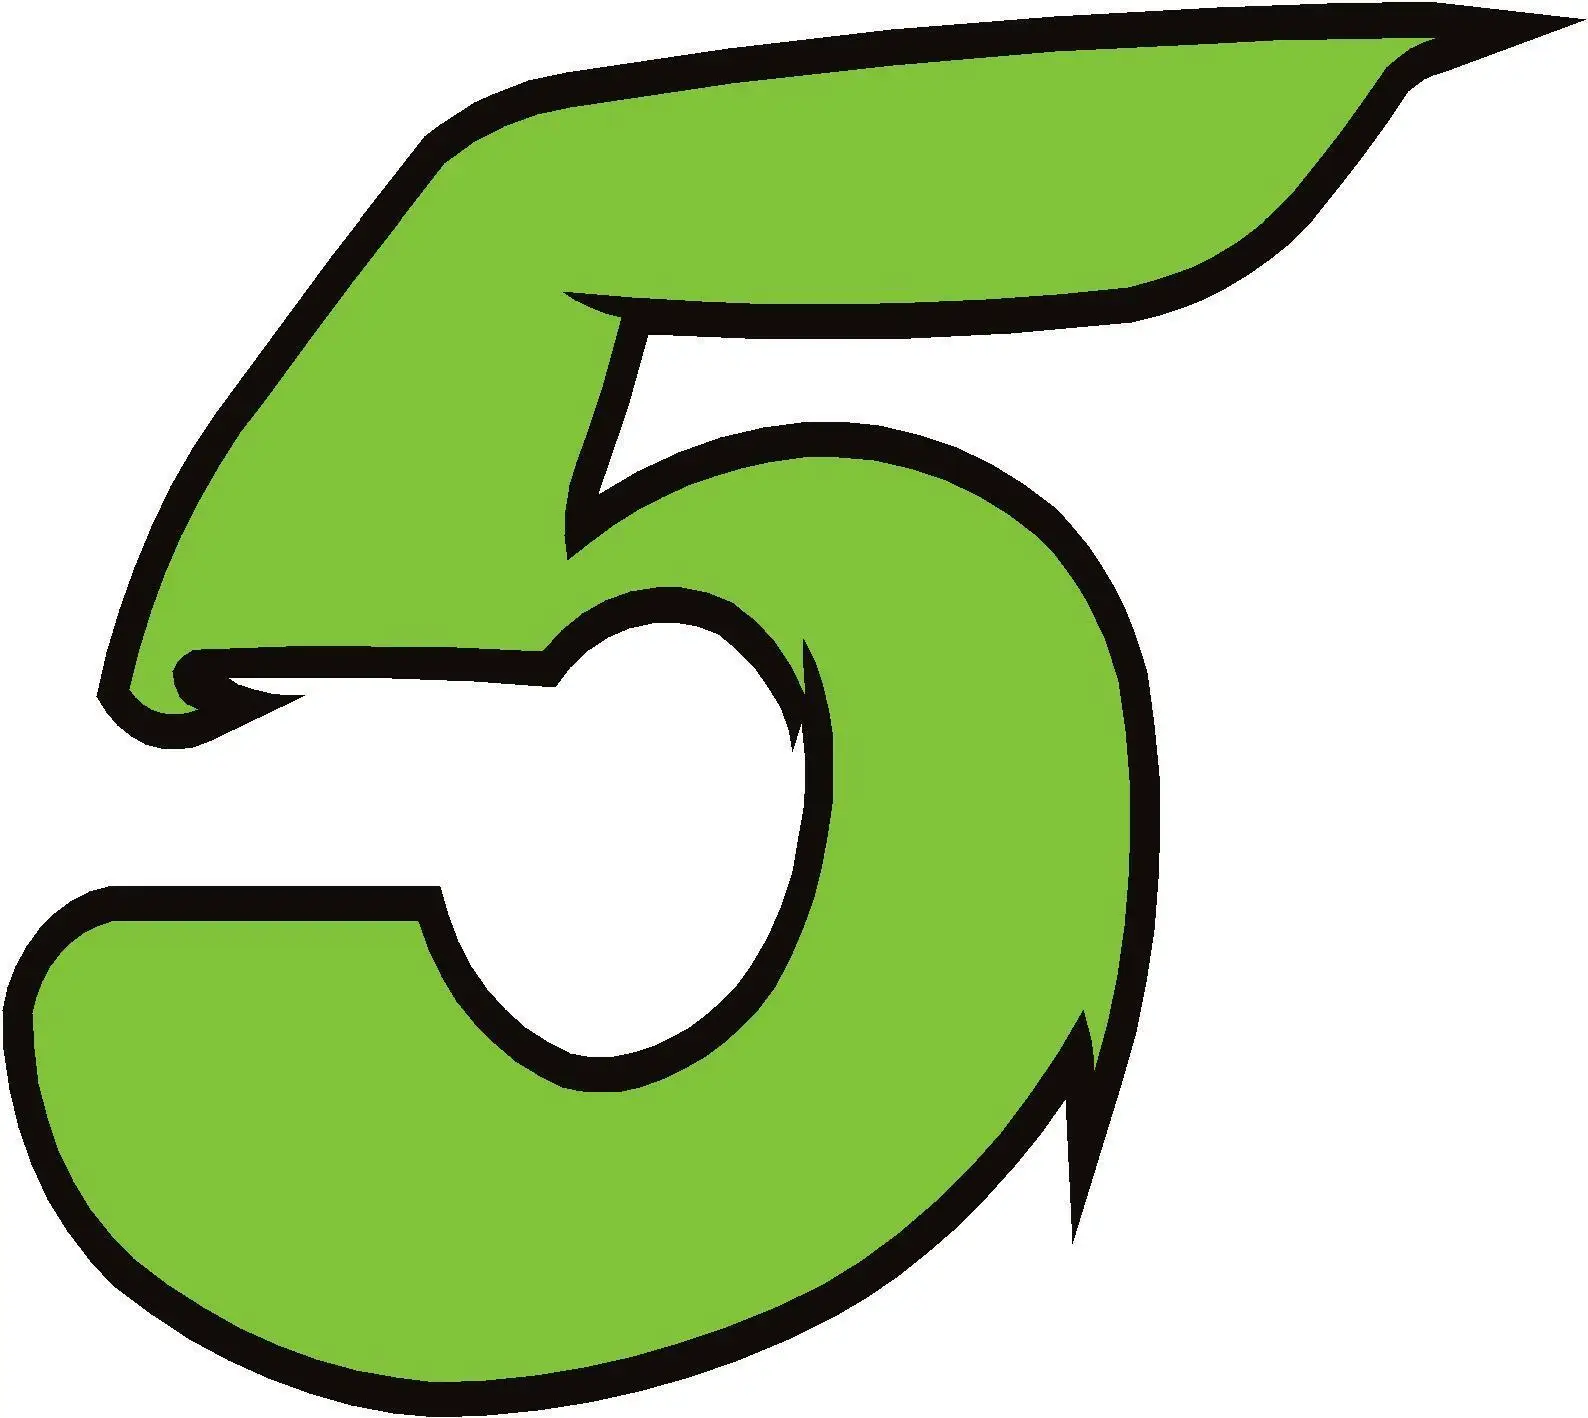 Цифра 5 зеленая